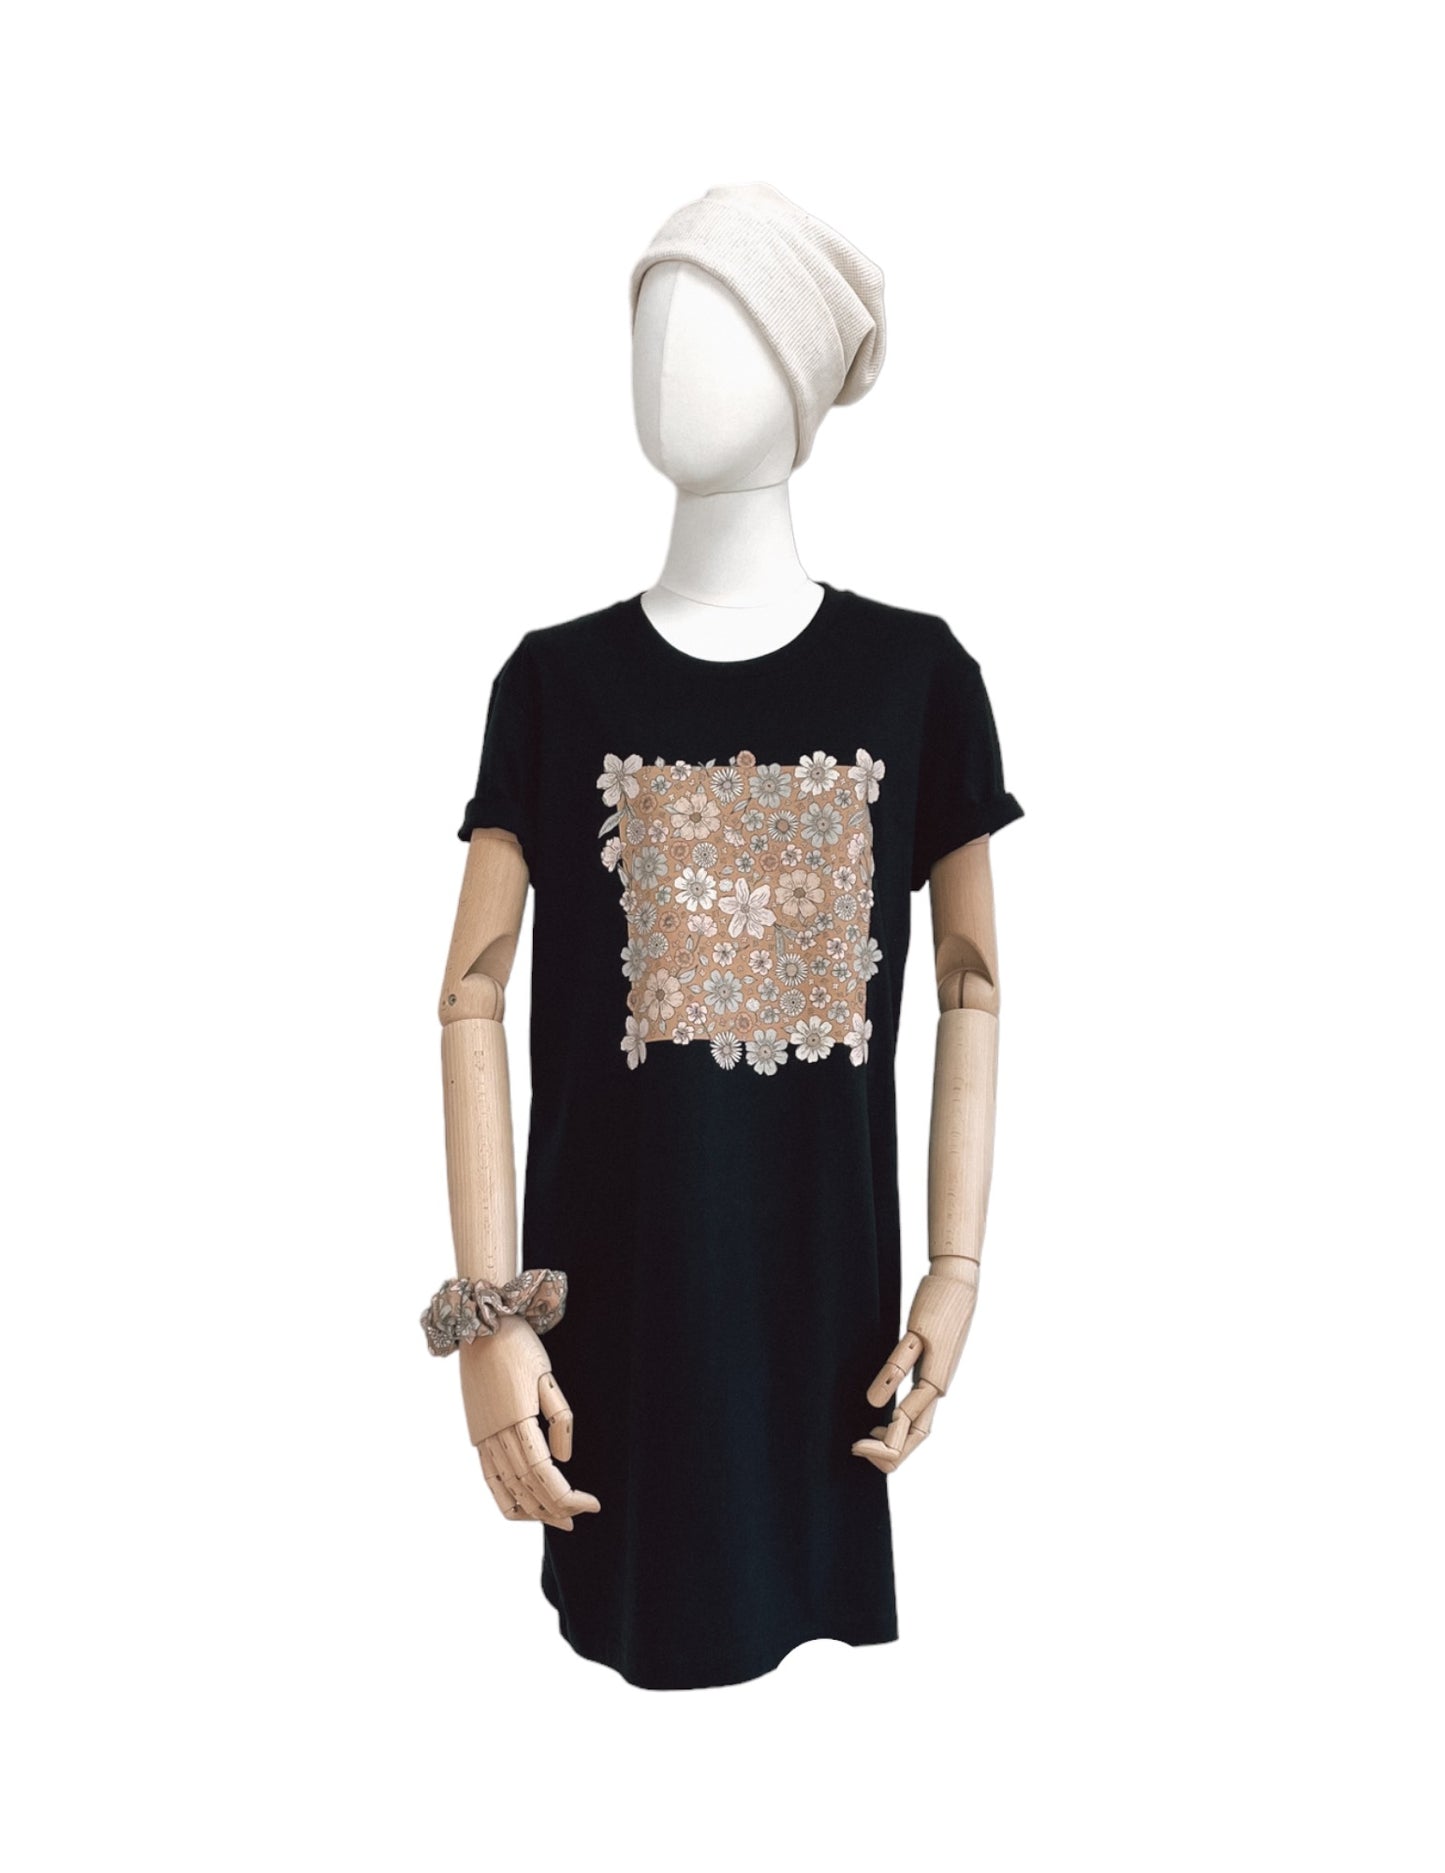 T-shirt dress / Caramel bold floral / black